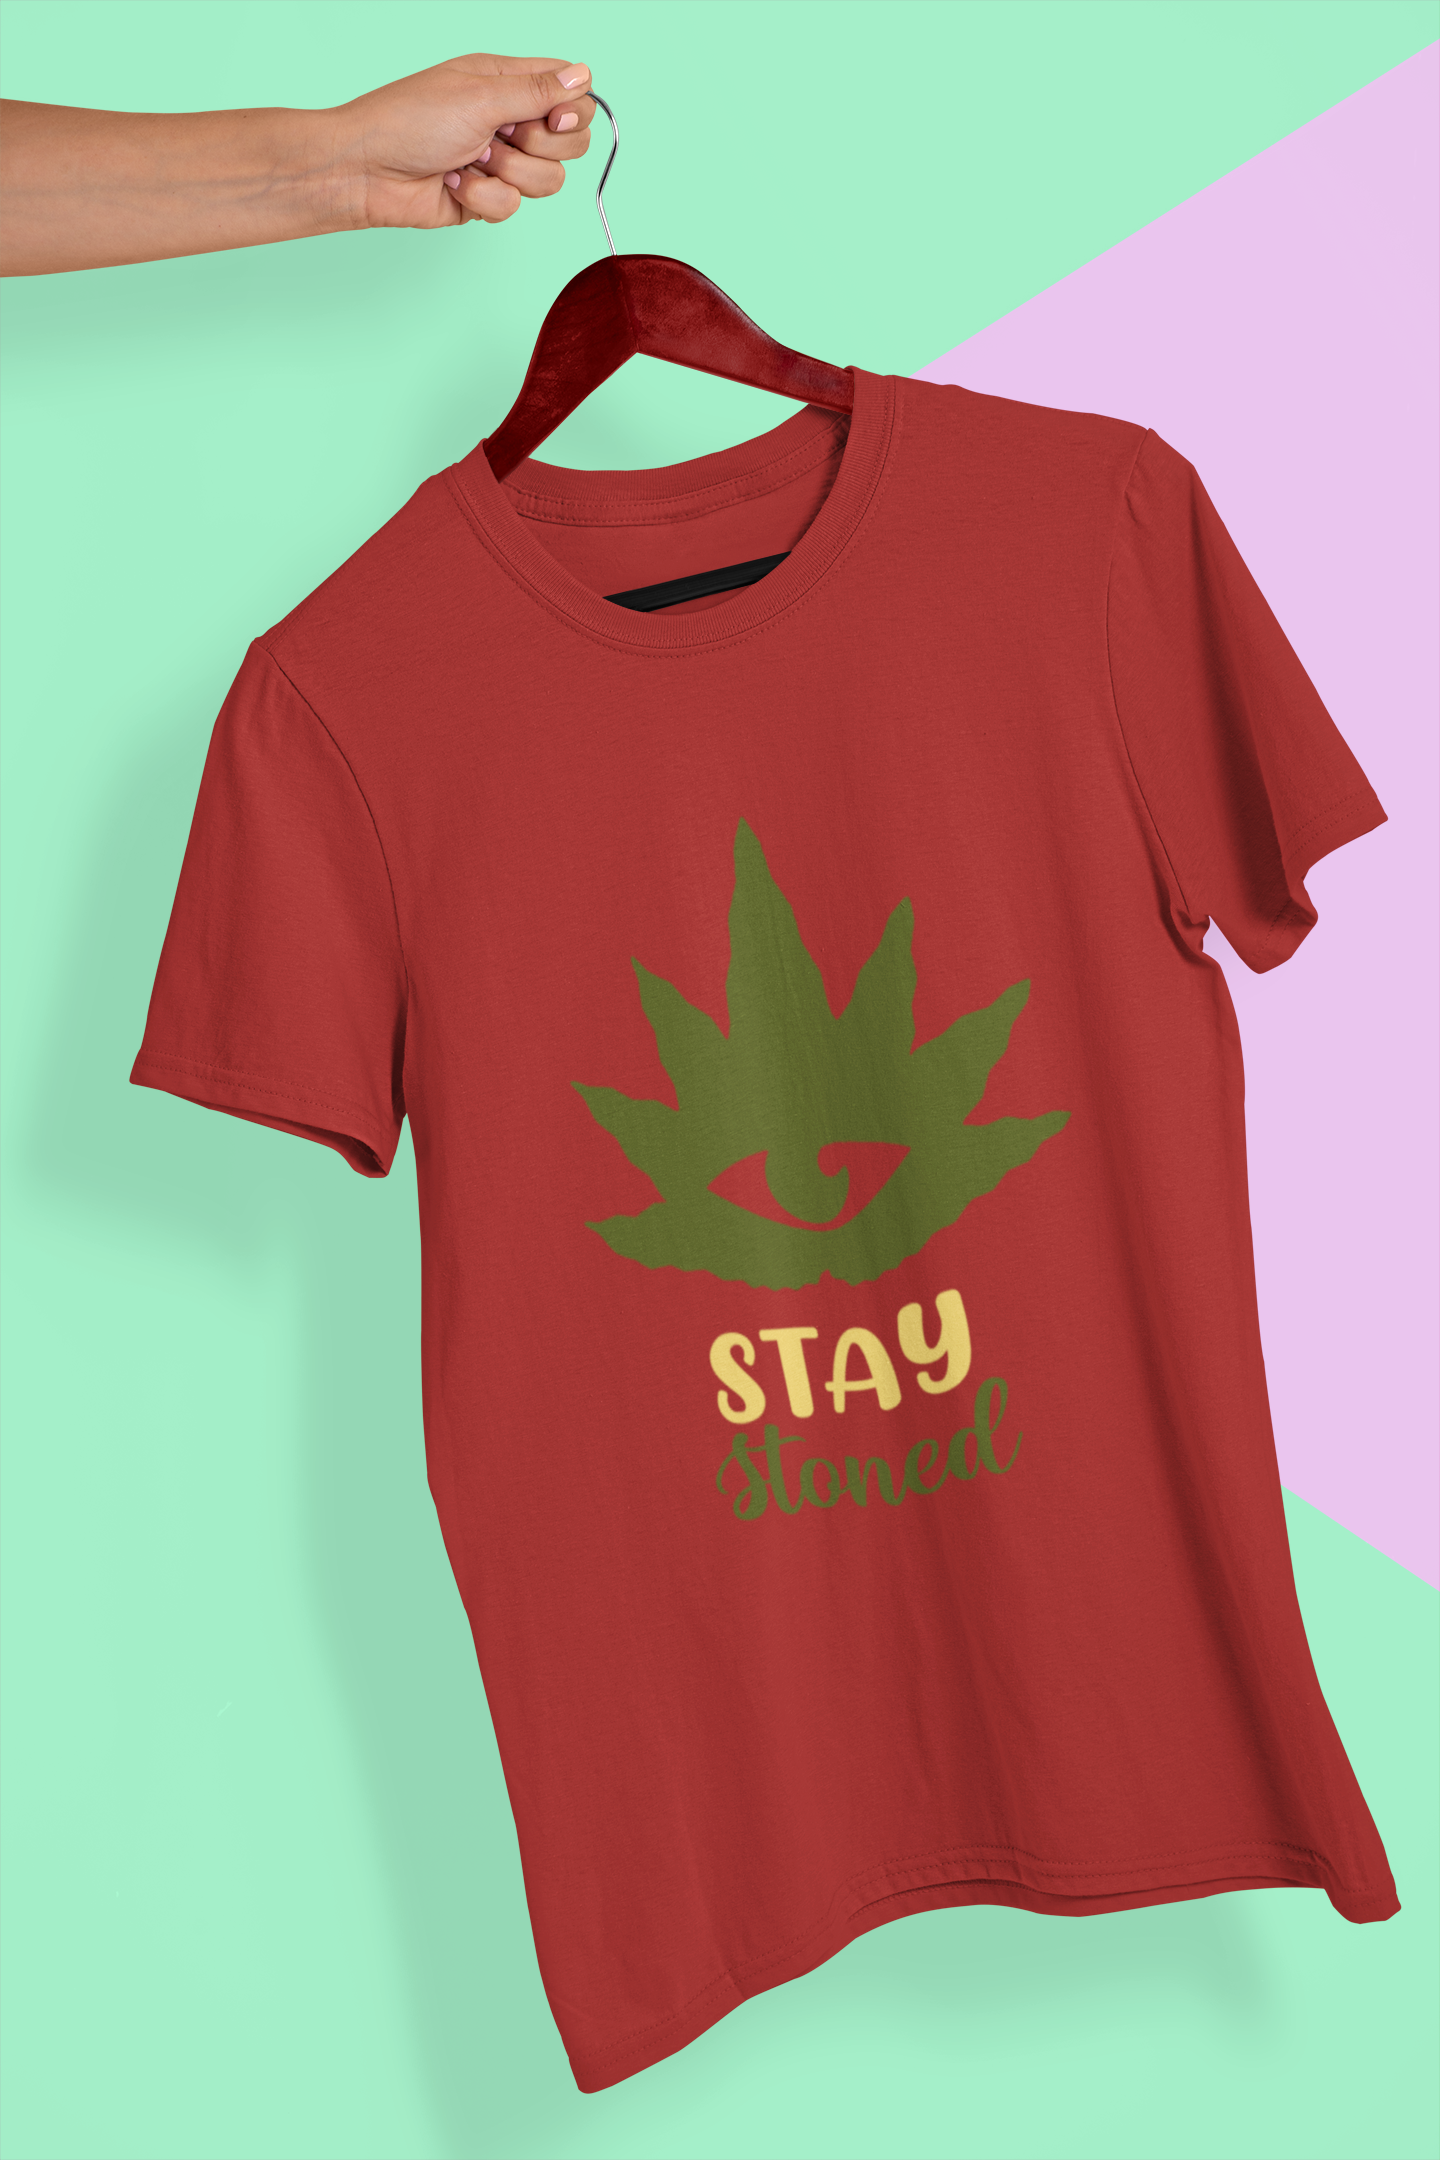 Stay Stoned Women Half Sleeves T-shirt- FunkyTeesClub